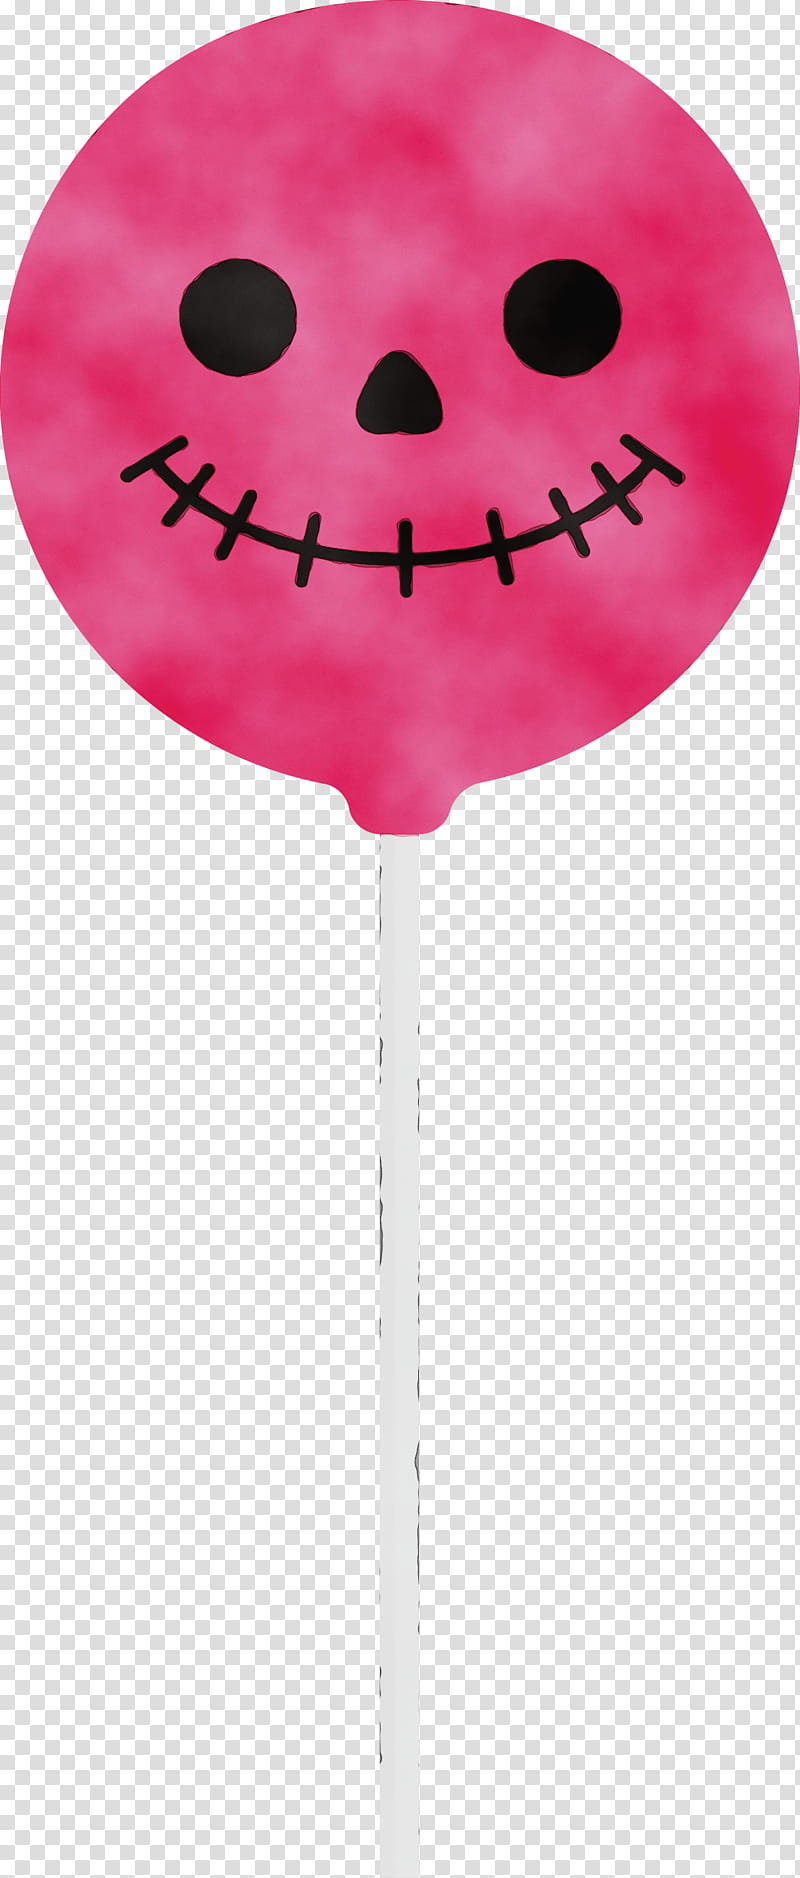 lollipop balloon flower heart m-095, Halloween , Watercolor, Paint, Wet Ink, M095 transparent background PNG clipart